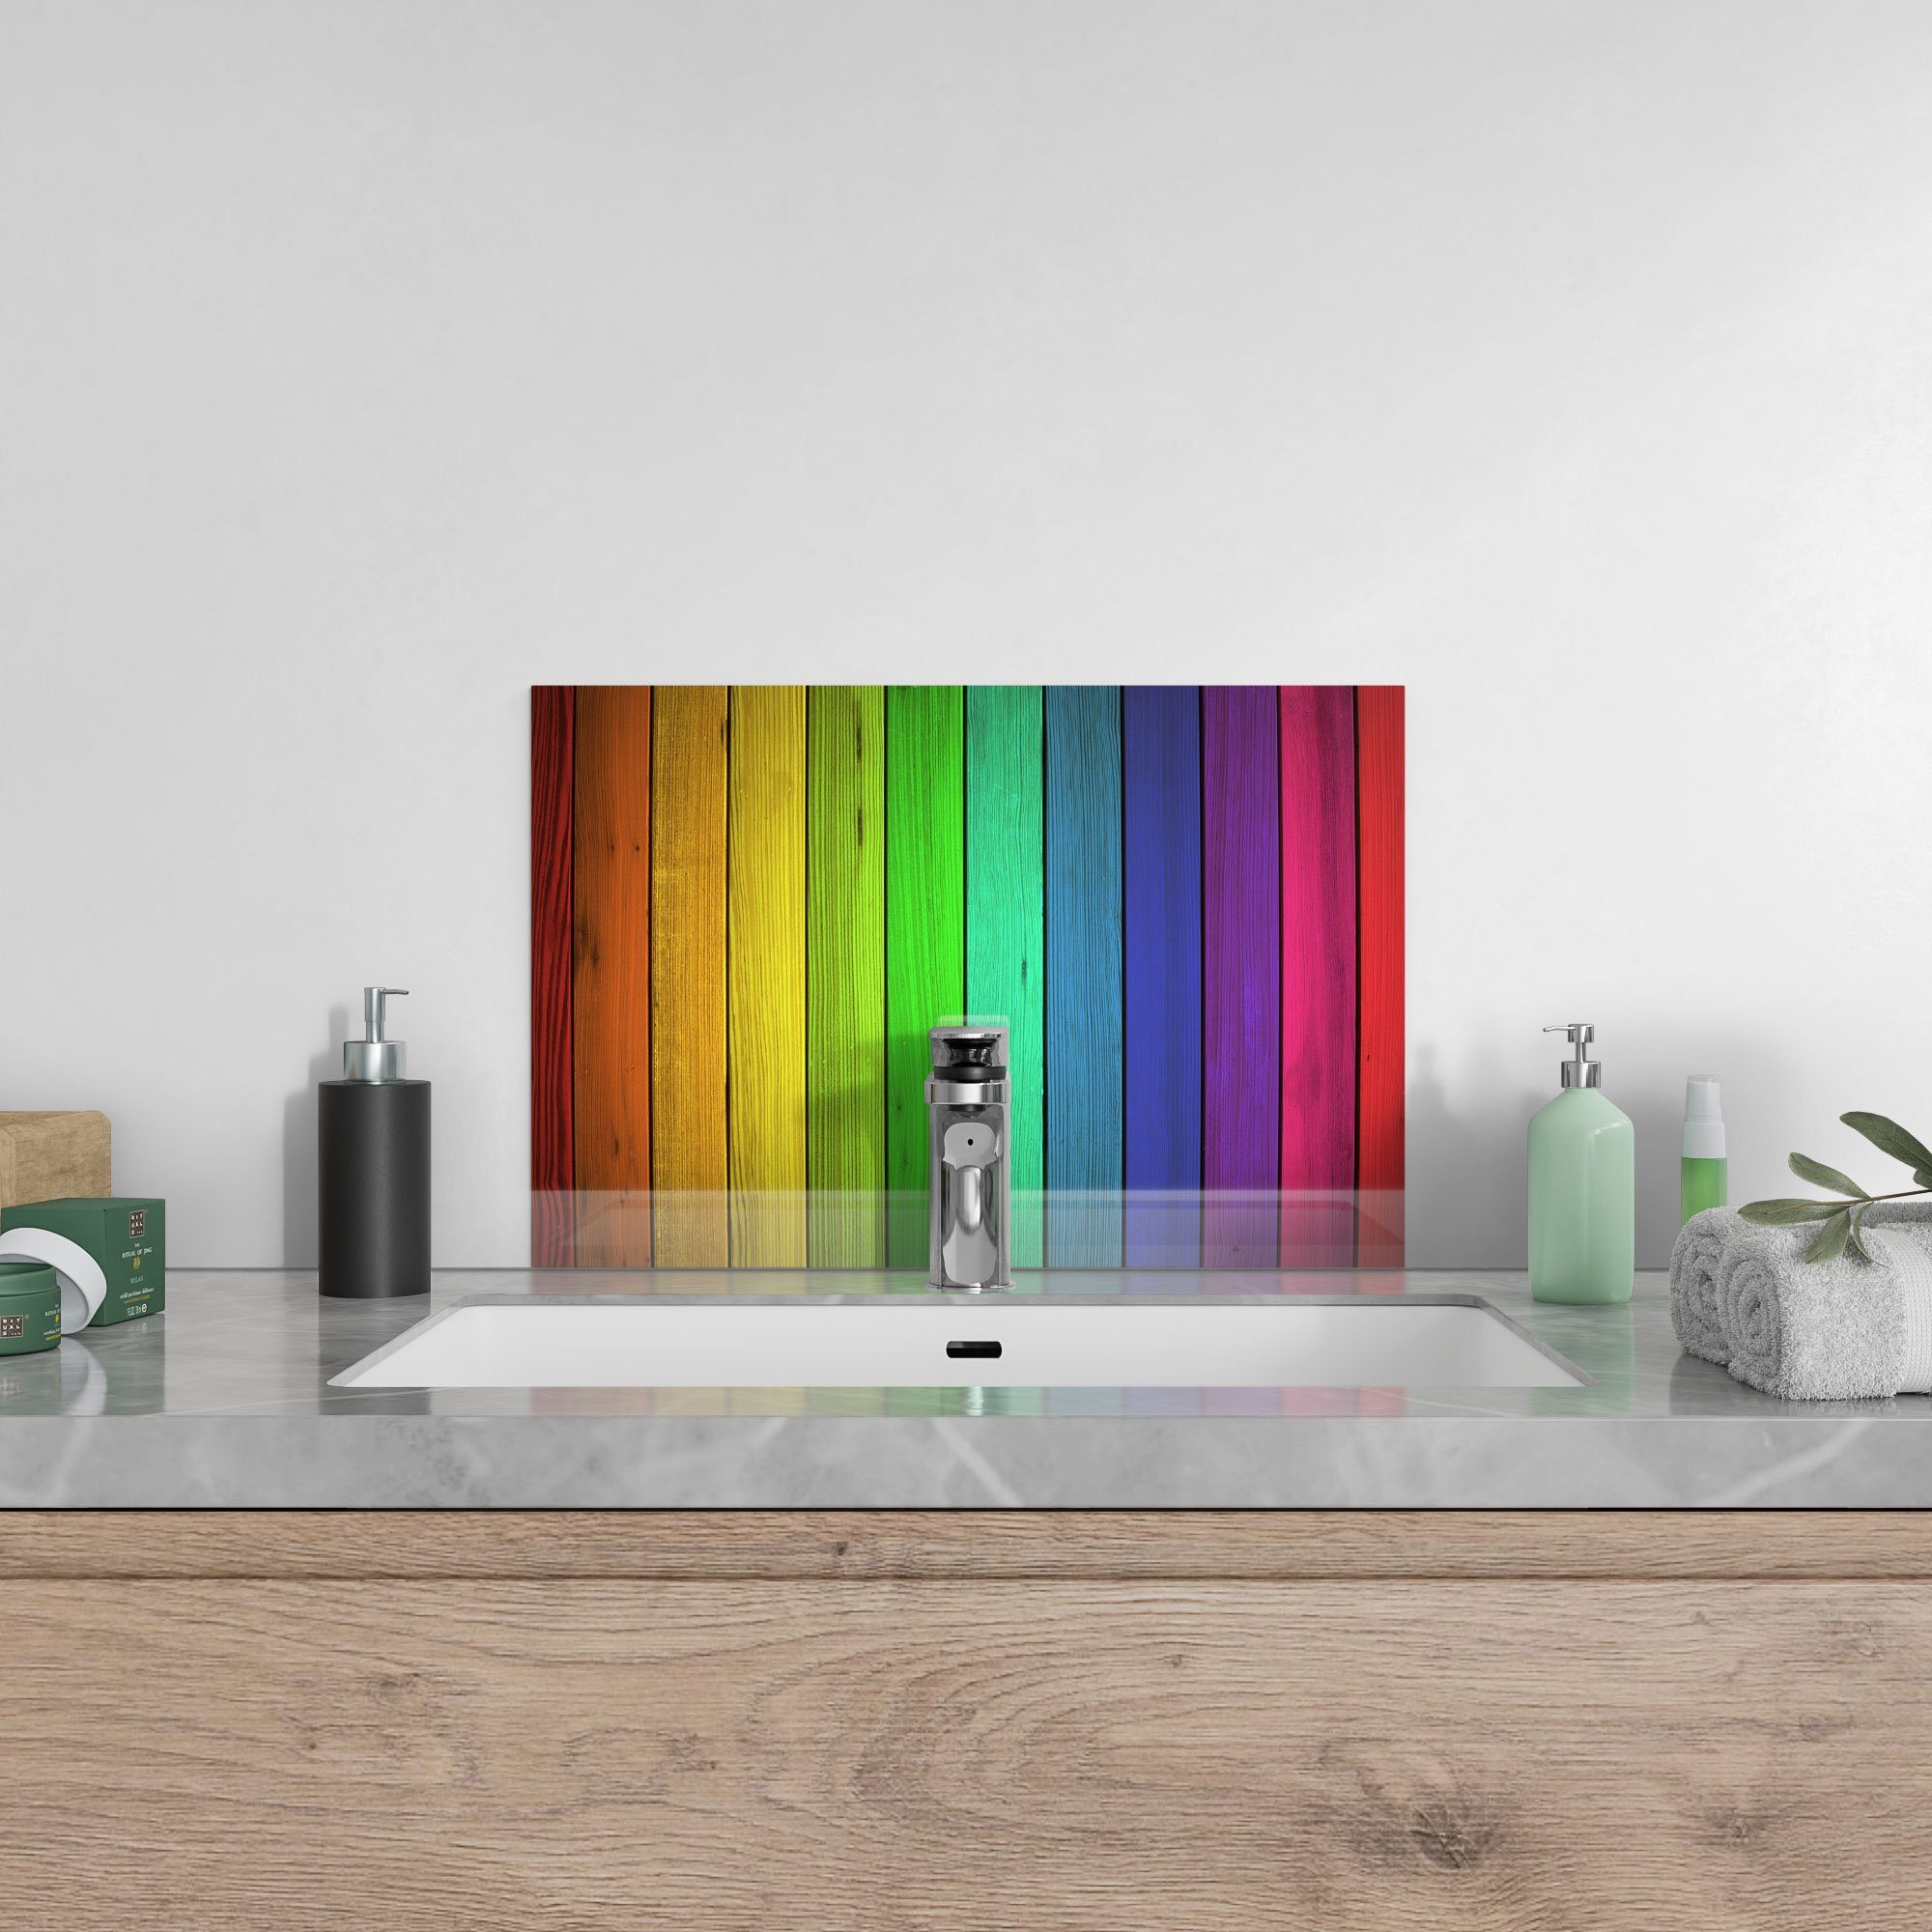 Badrückwand Herdblende DEQORI 'Farbige Küchenrückwand Holzlatten', Spritzschutz Glas